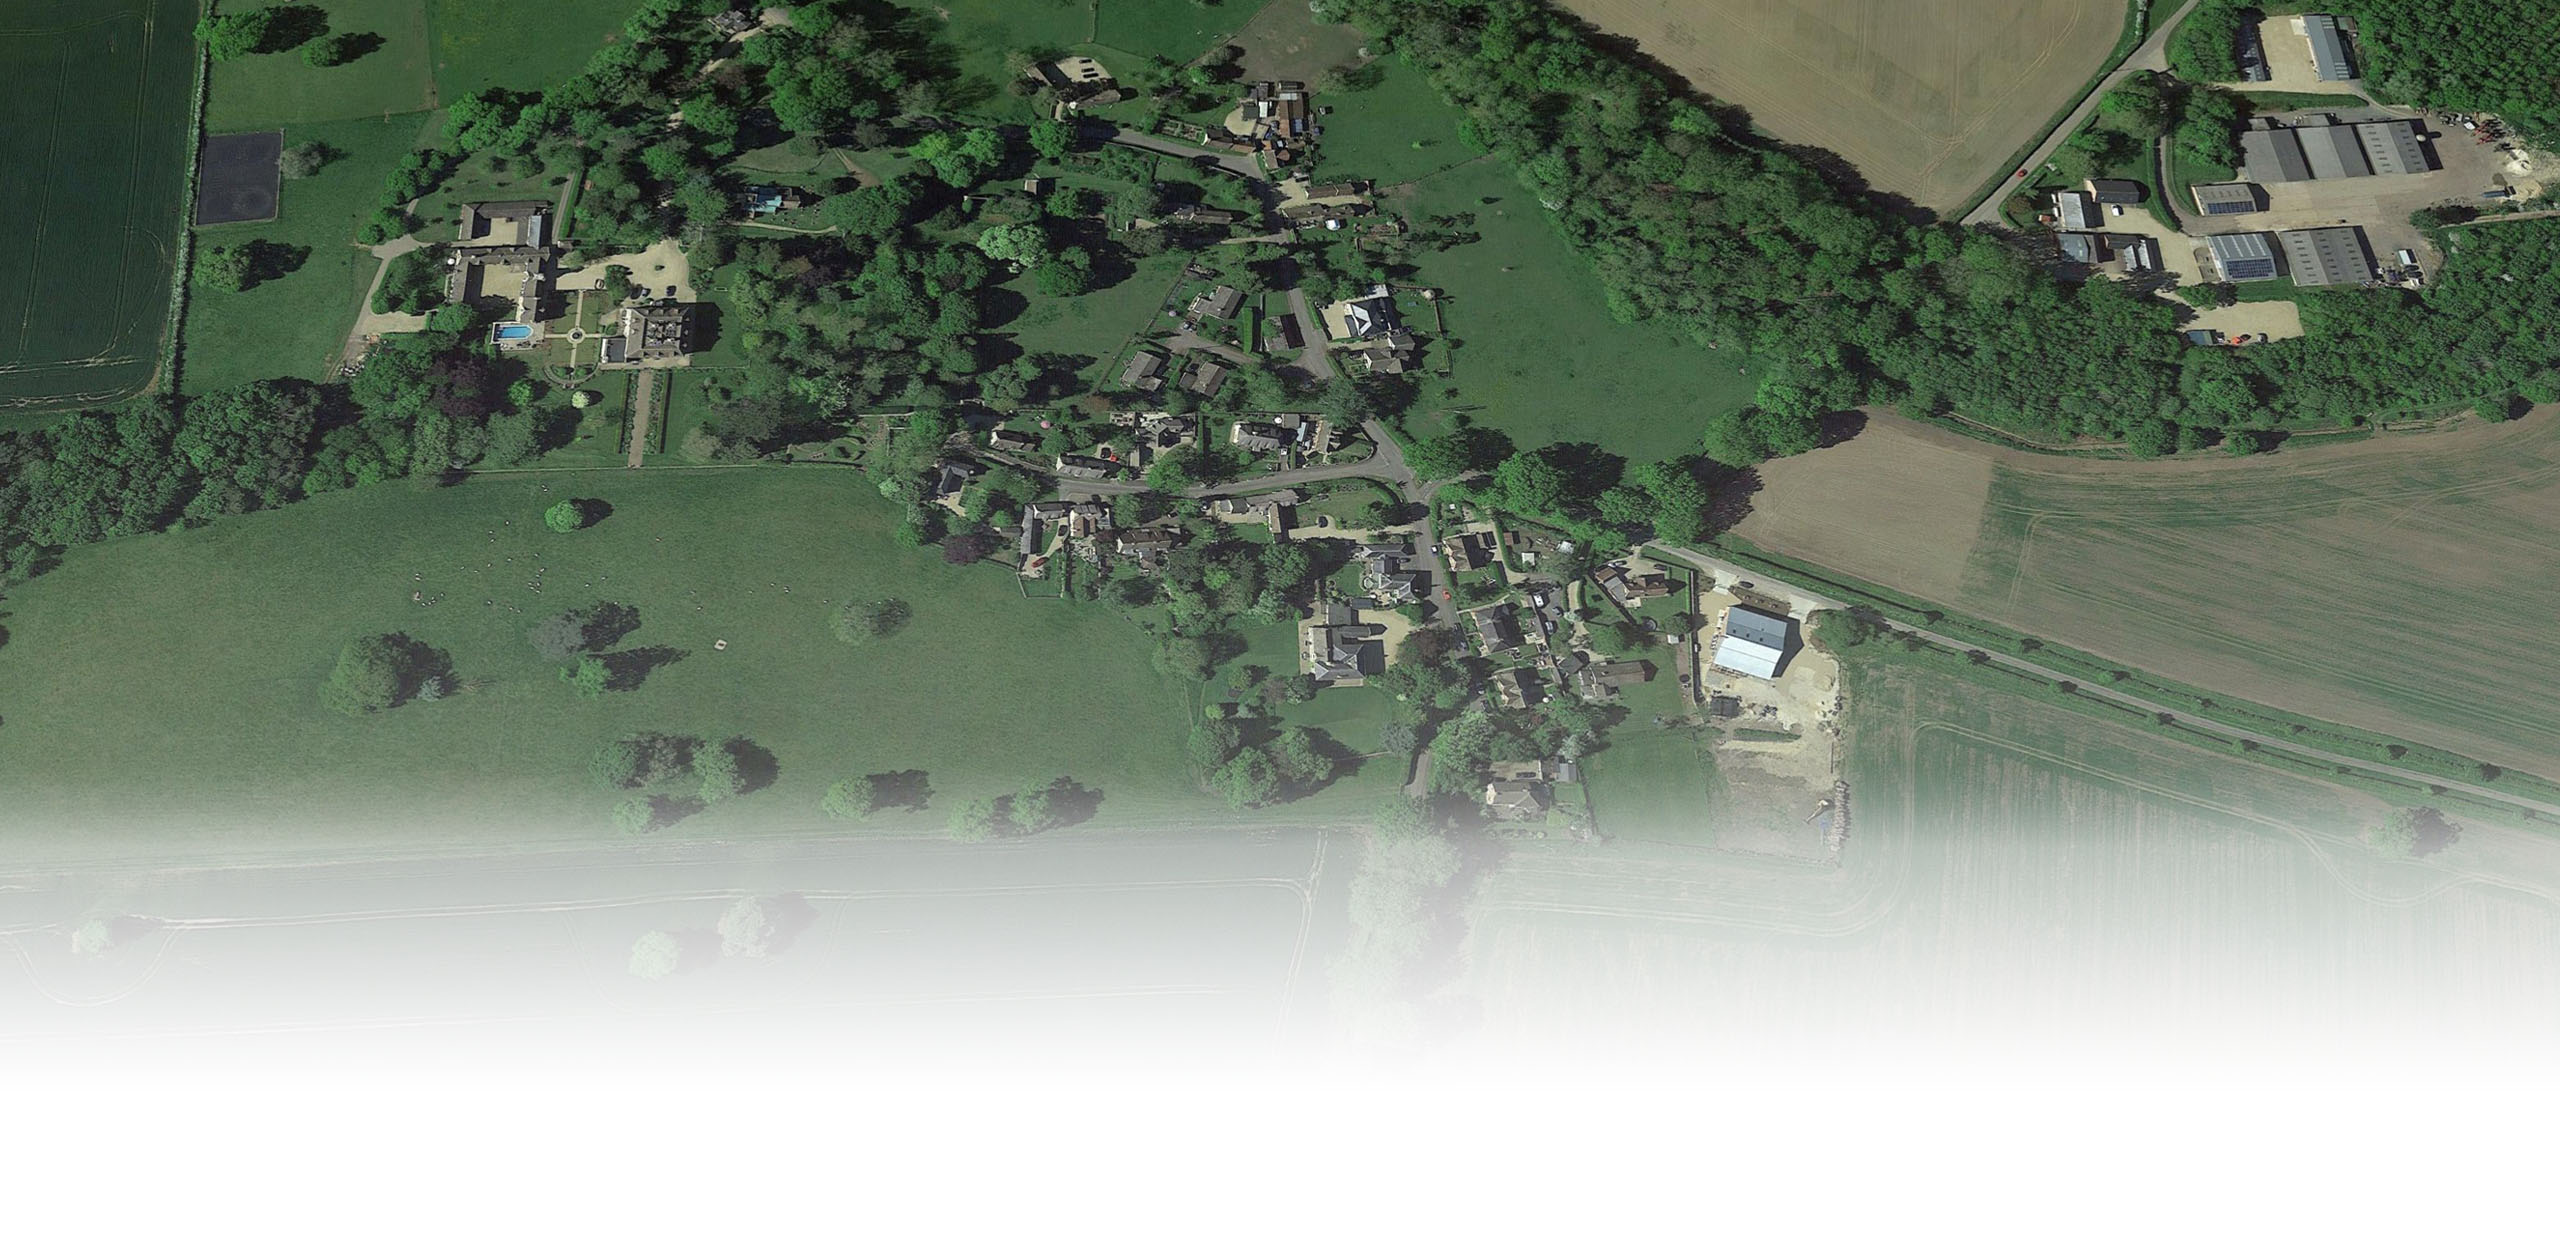 Lyndon Village - Google Maps Satellite